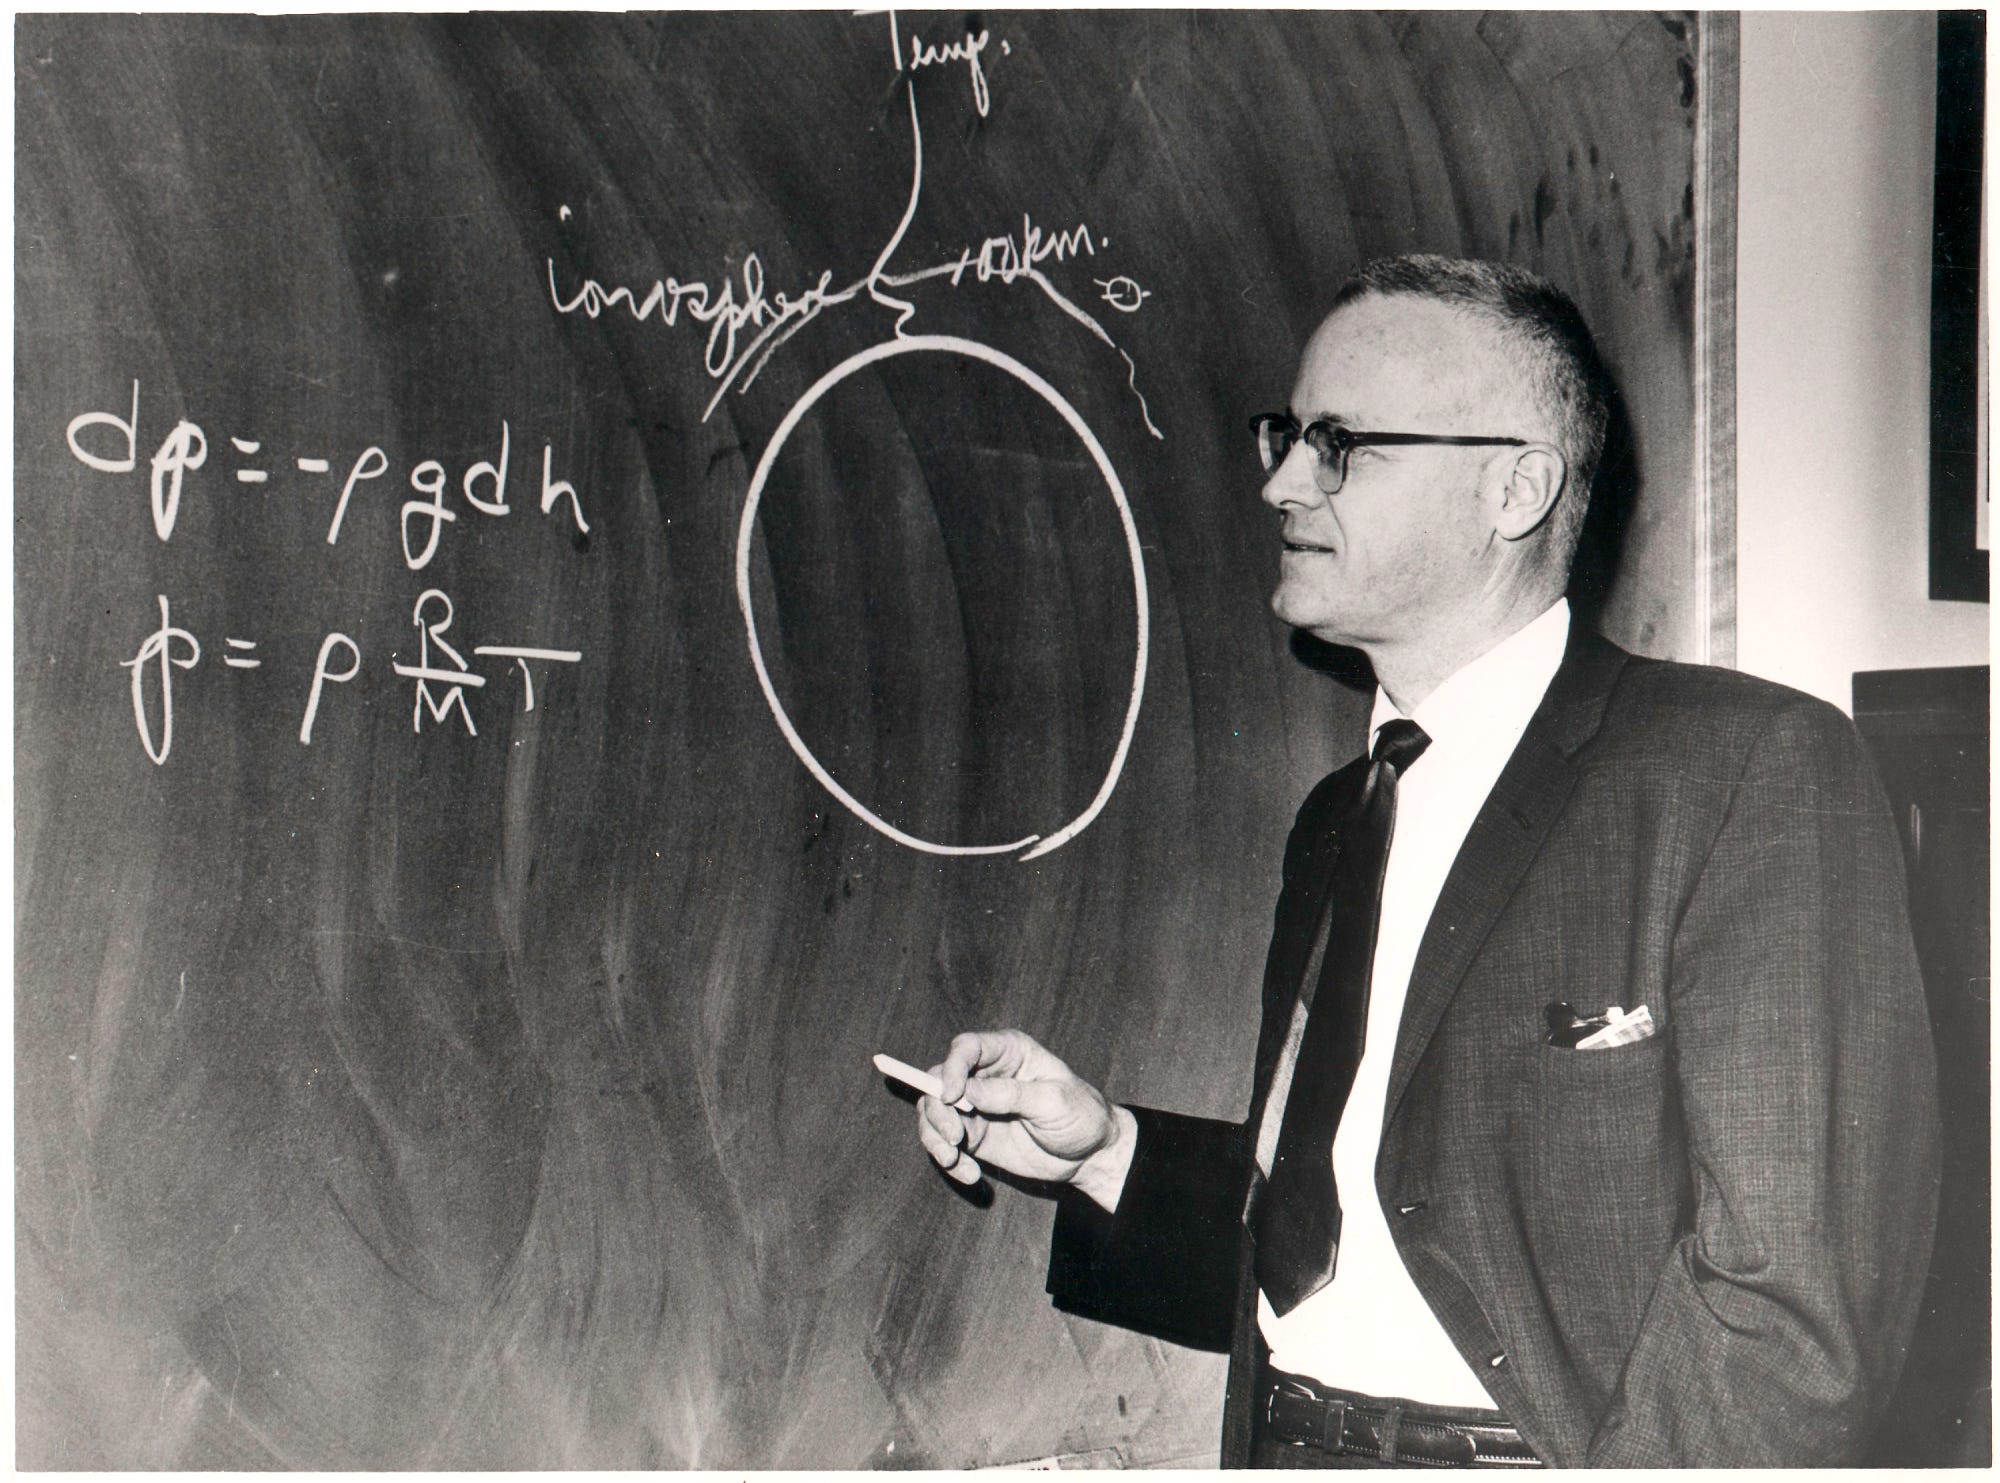 NASA scientist Homer E. Newell Jr. explaining some physics on a chalkboard, c. 1973